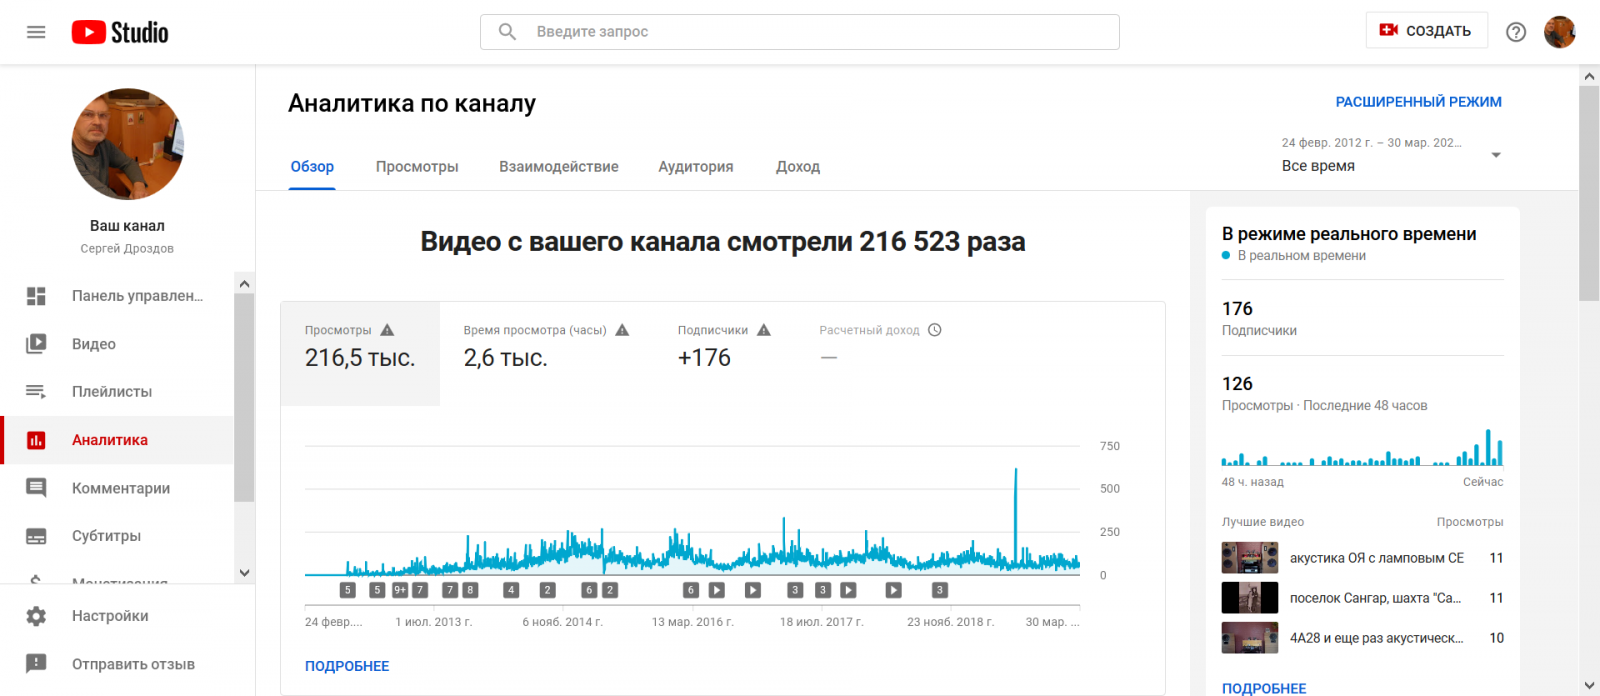 Screenshot_2020-03-31 Аналитика по каналу - YouTube Studio.png